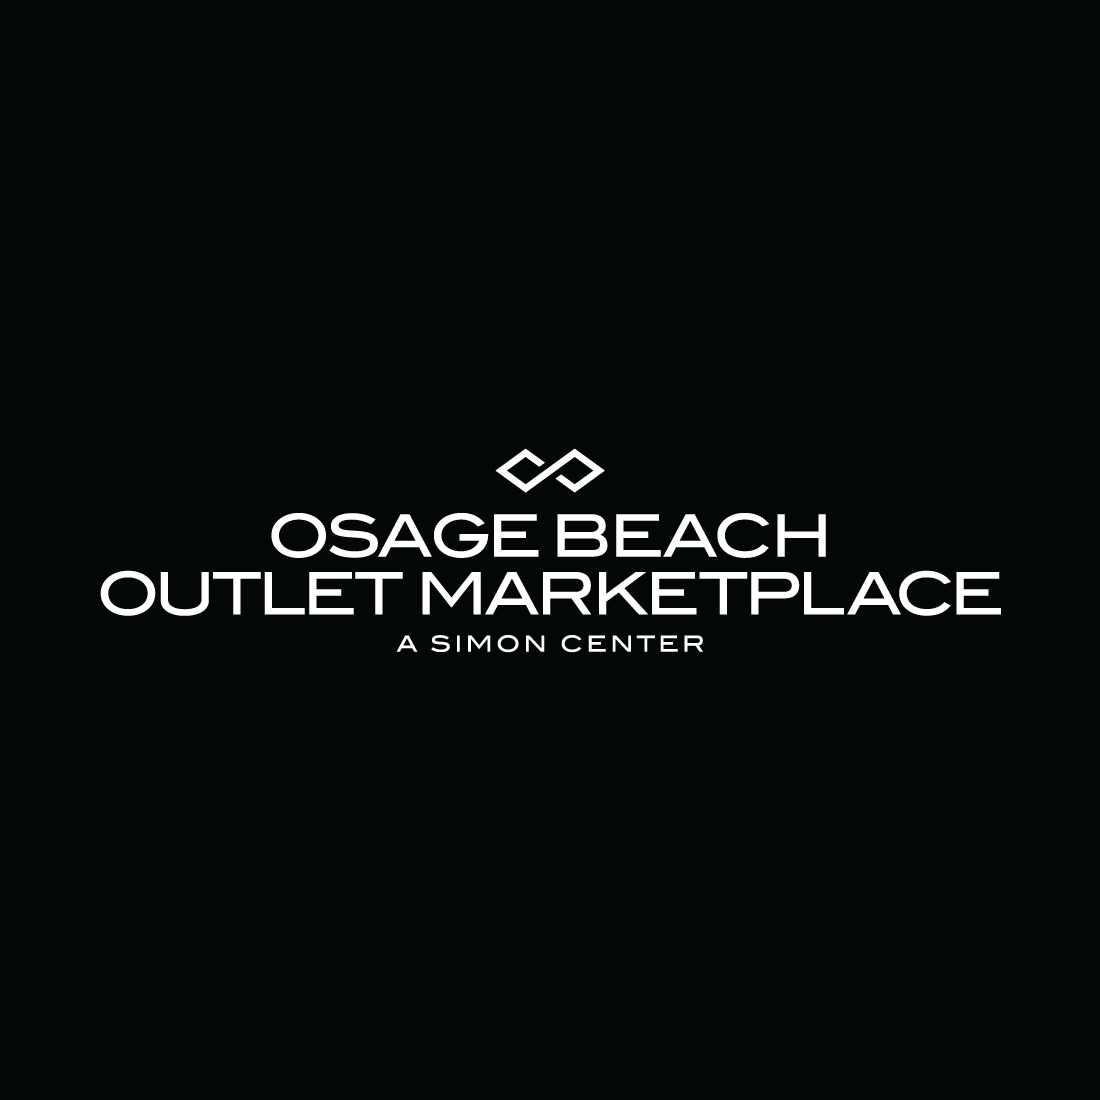 Osage Beach Outlet Marketplace, Osage Beach Missouri (MO) - www.neverfullbag.com